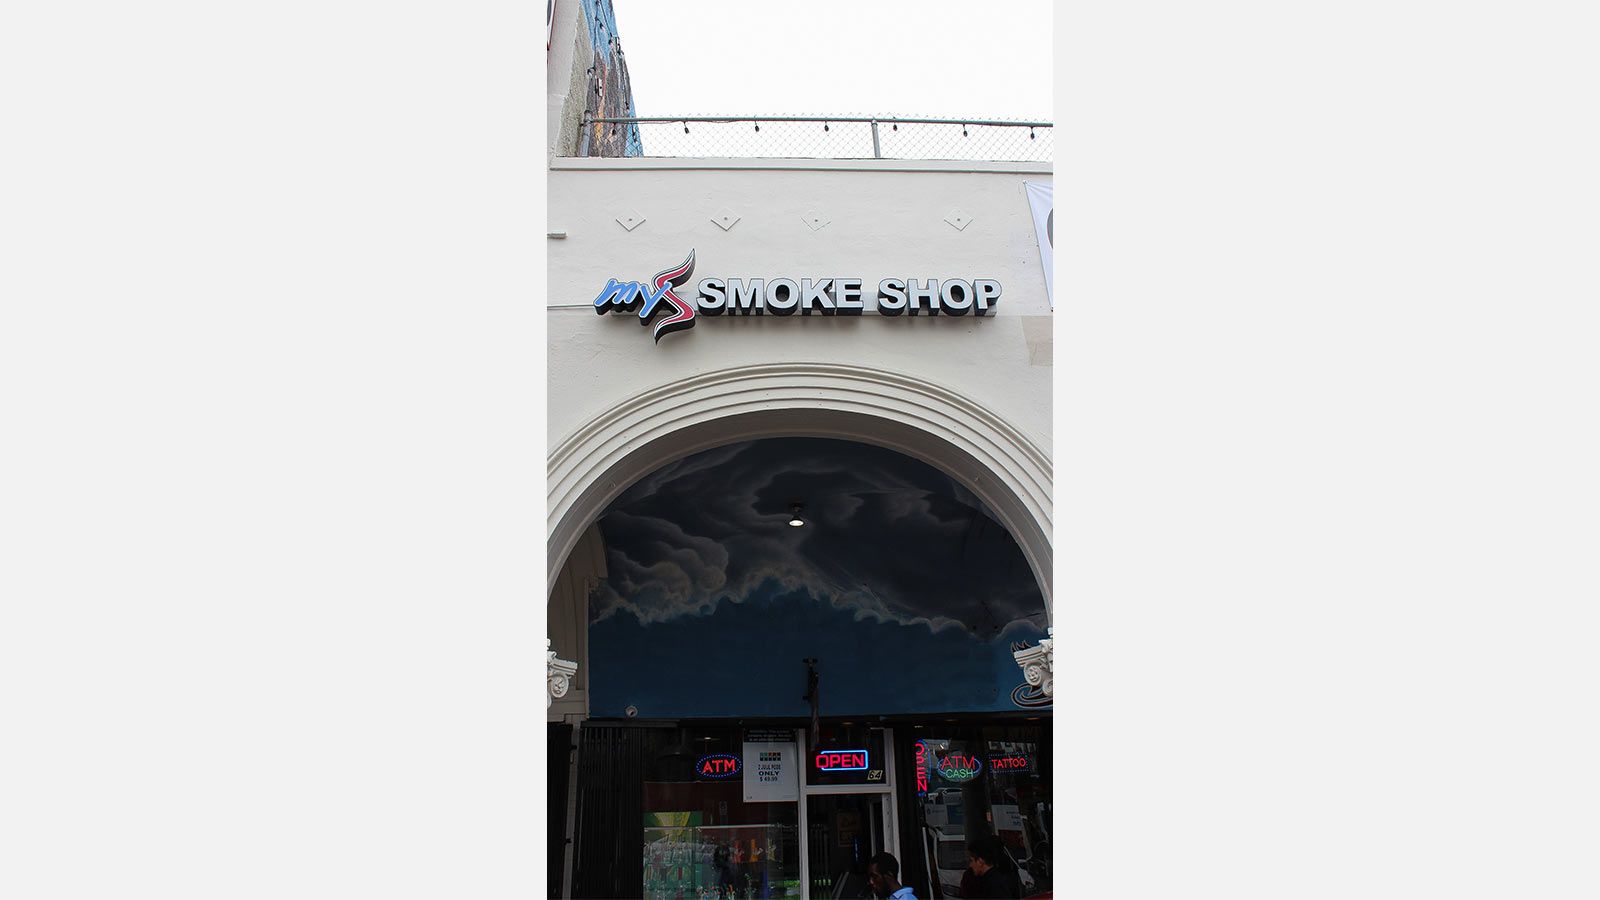 my smoke shop face lit letters